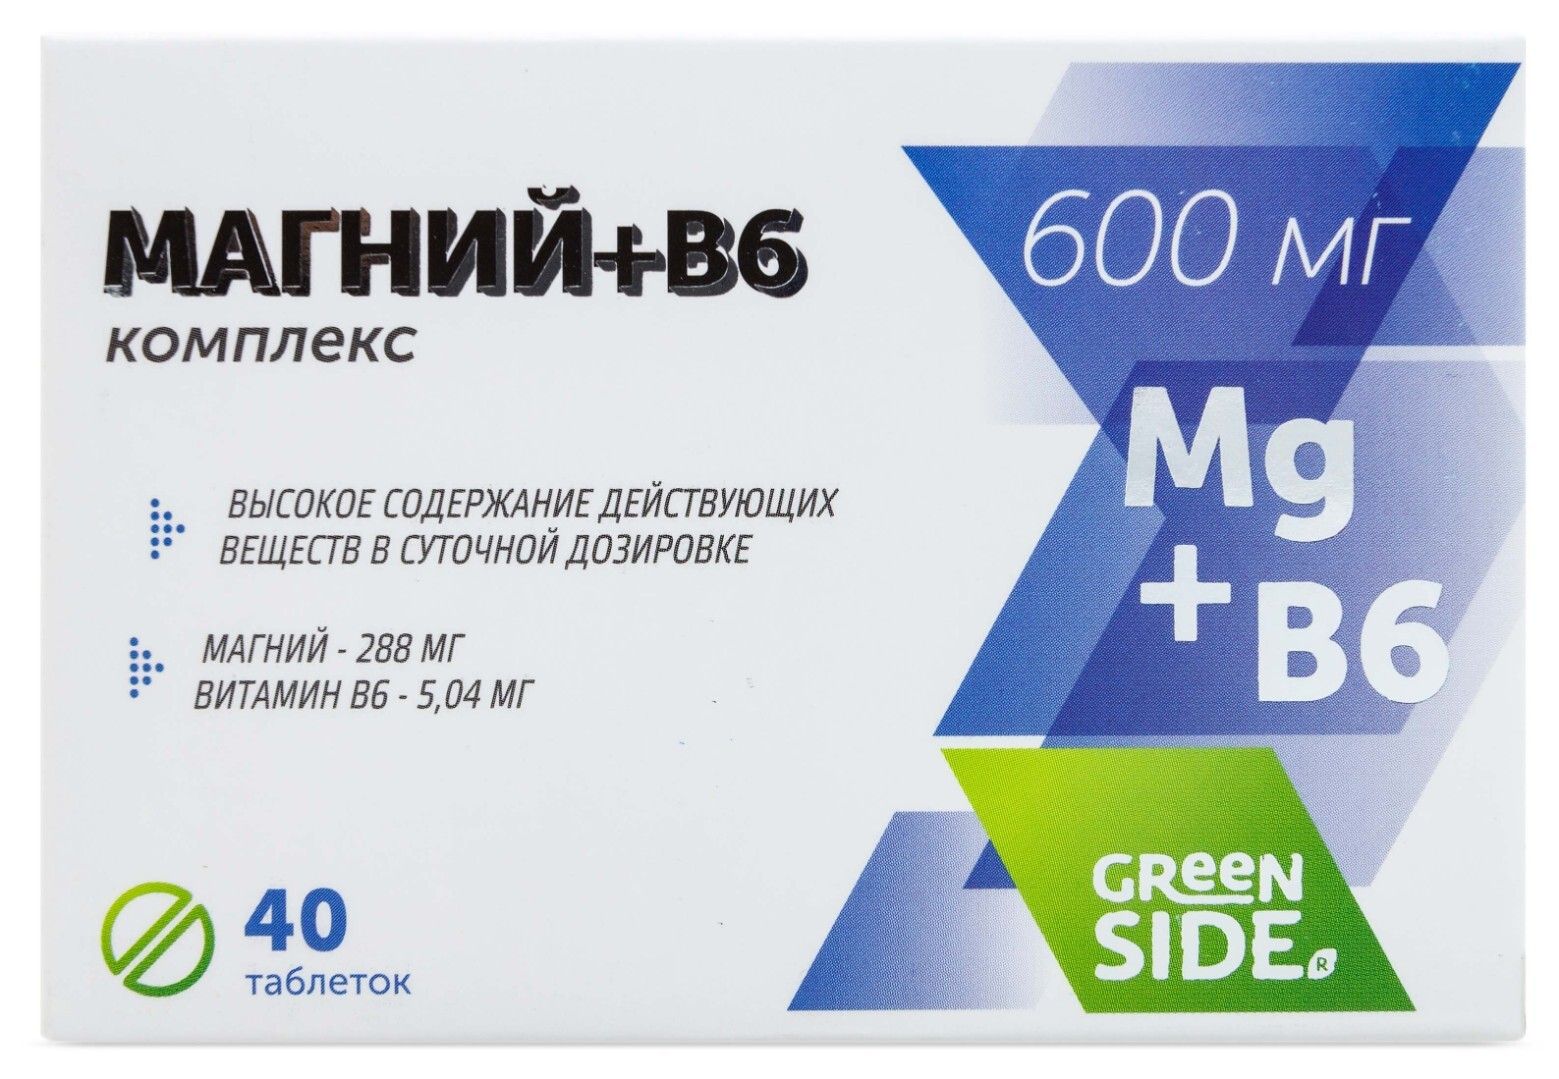 Б6 60. Магний в6 600 мг. Magnesium b6 Complex таблетки. Магний б6 600мг. Витаминный комплекс магний в6.